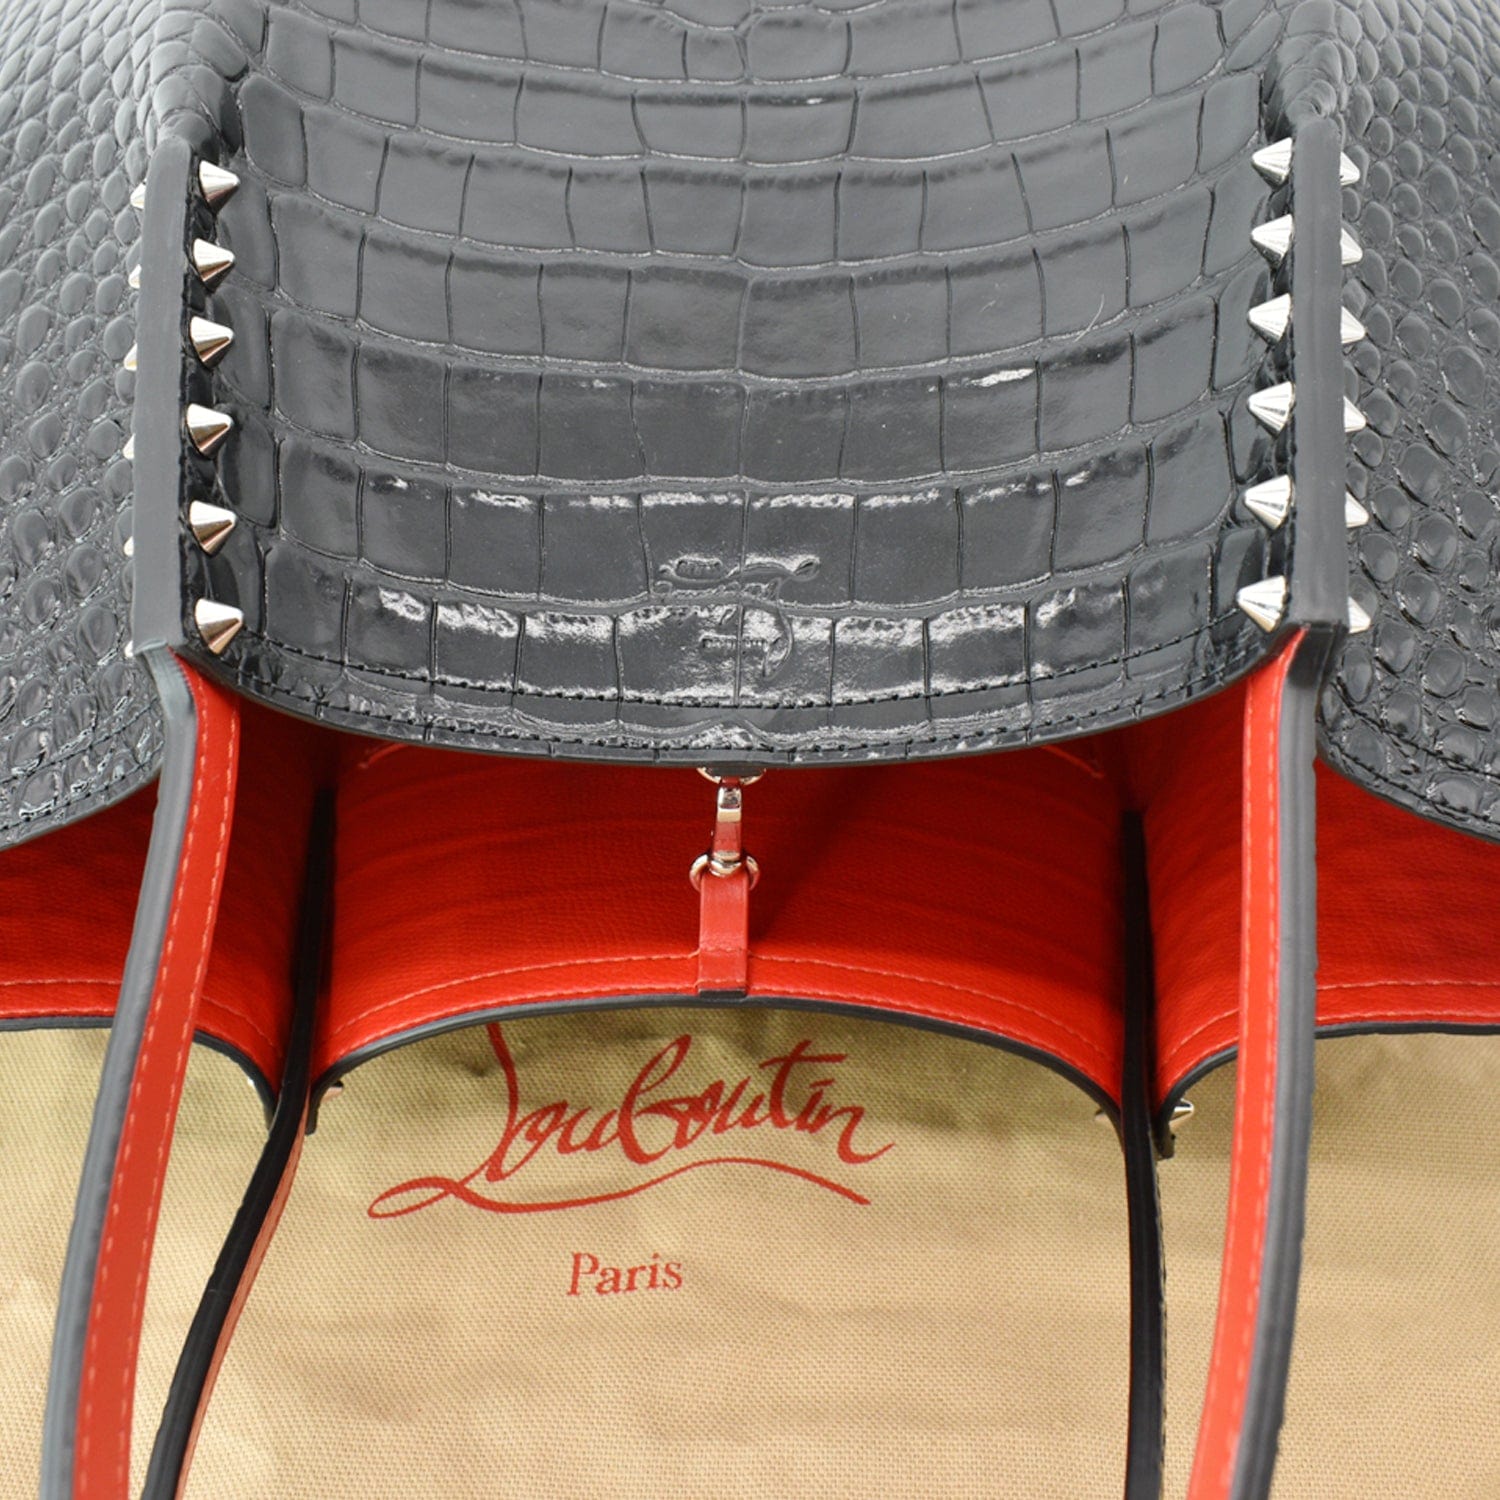 Christian Louboutin Cabarock Large Crocodile White Leather TOTE bag –  HIMMAPPAREL